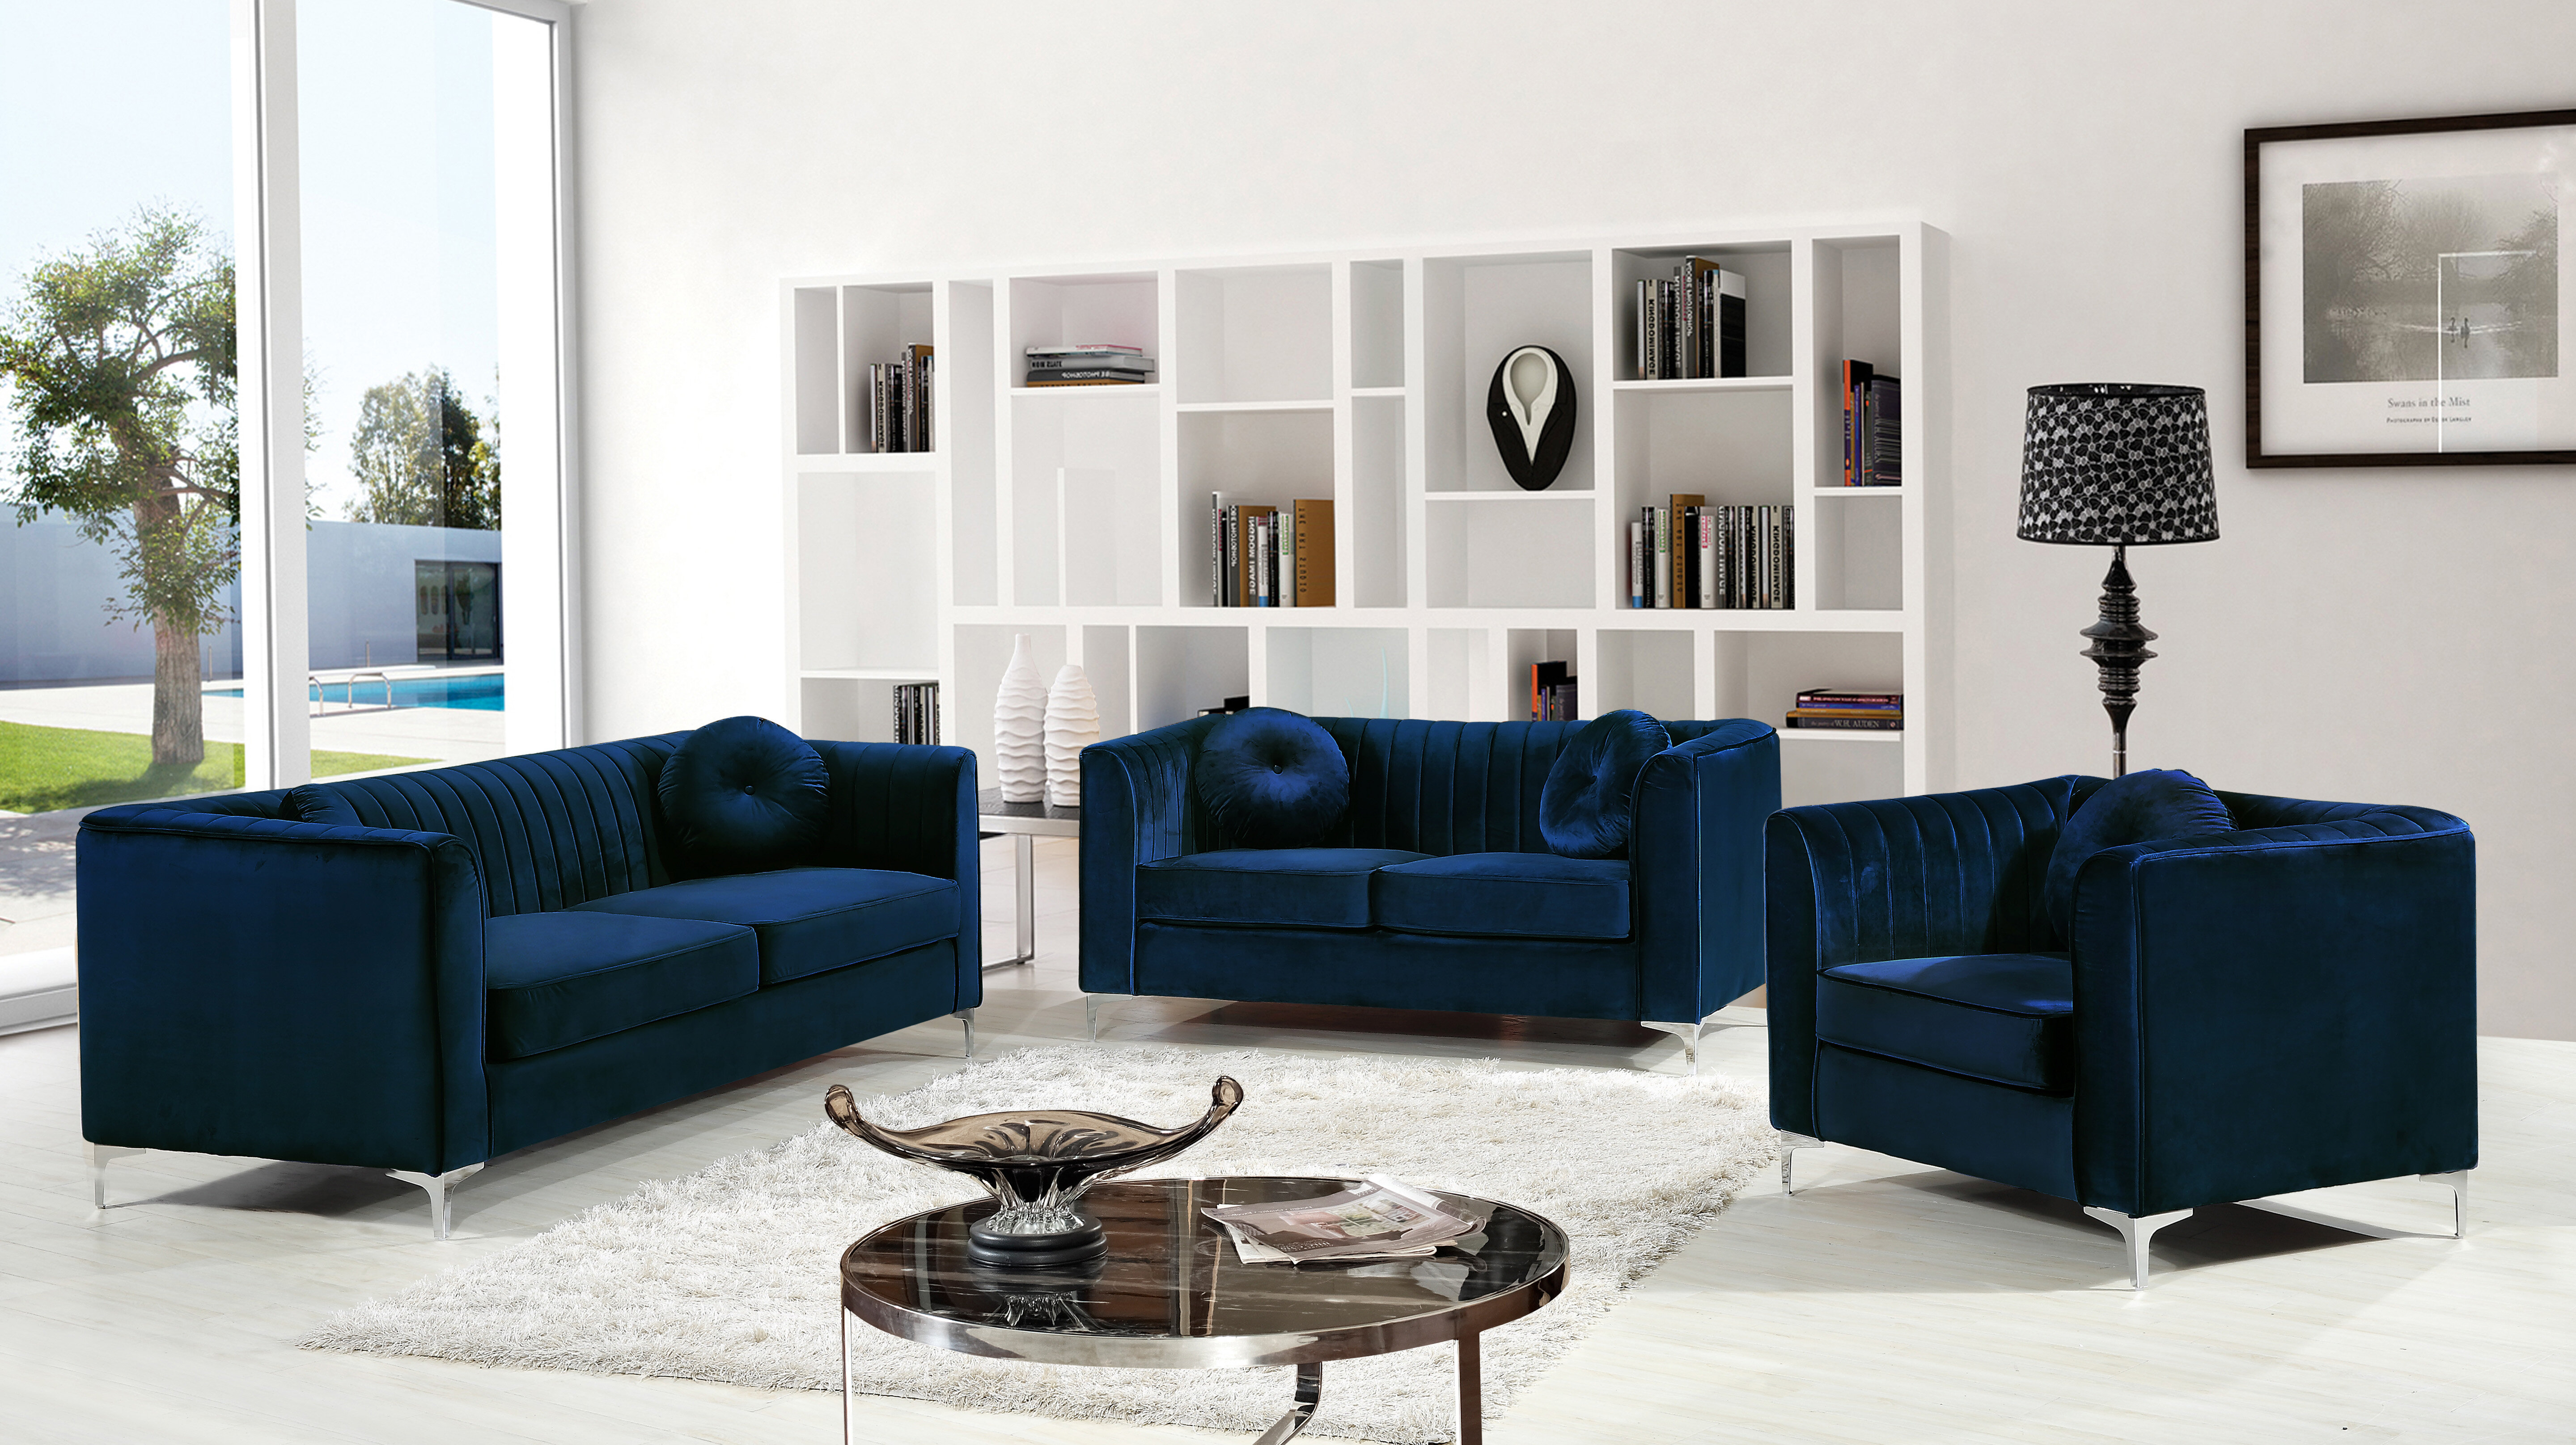 Willa Arlo Interiors Herbert Conservatory Configurable Living Room Set Reviews Wayfair